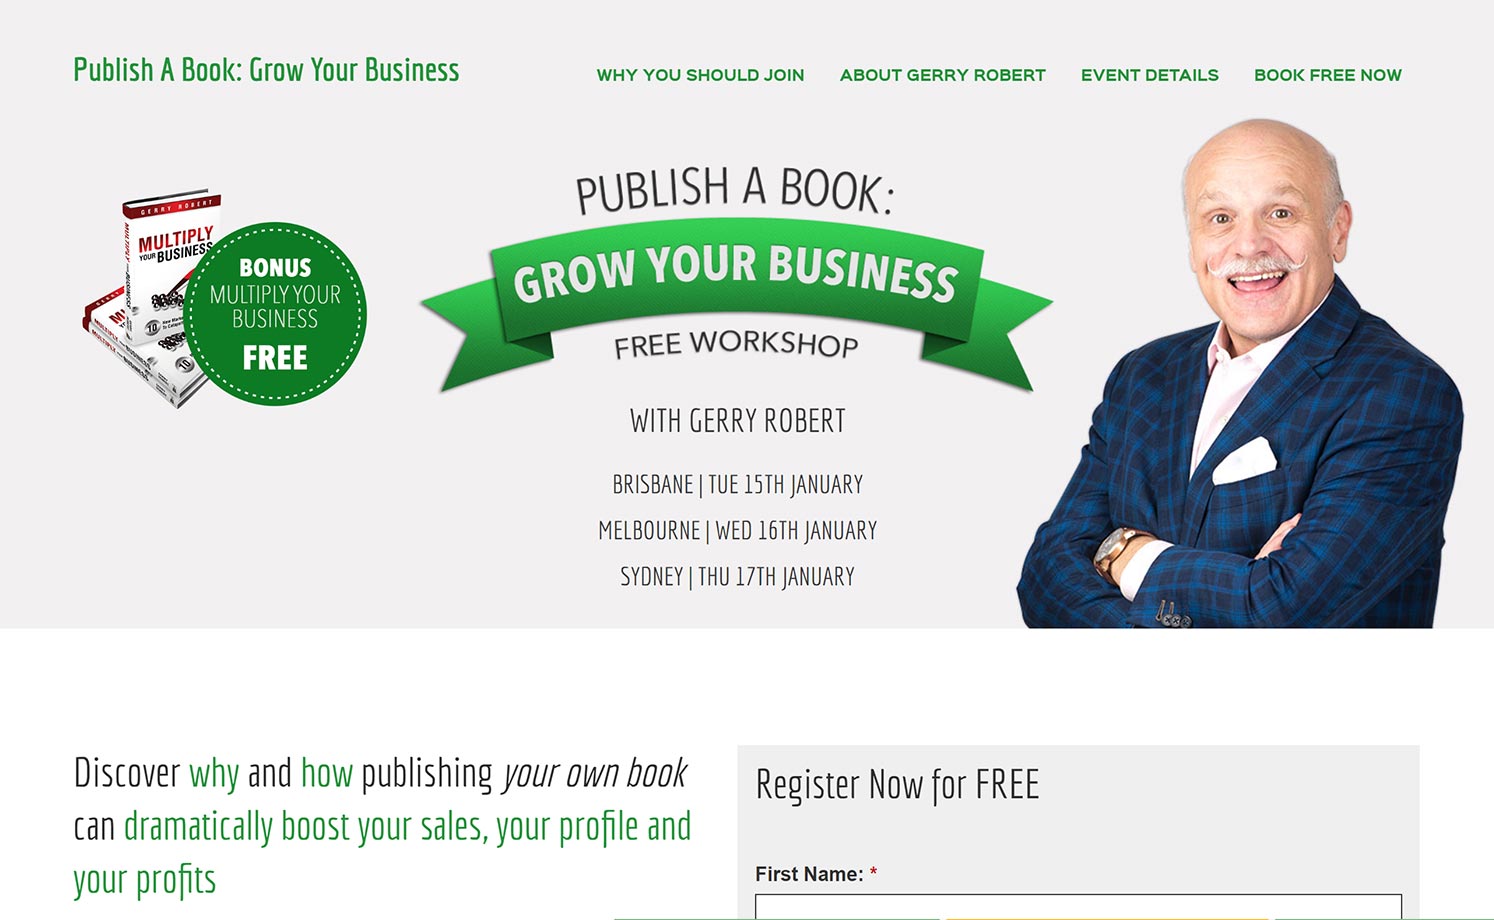 Gerry Robert's Publish A Book, Grow Your Business